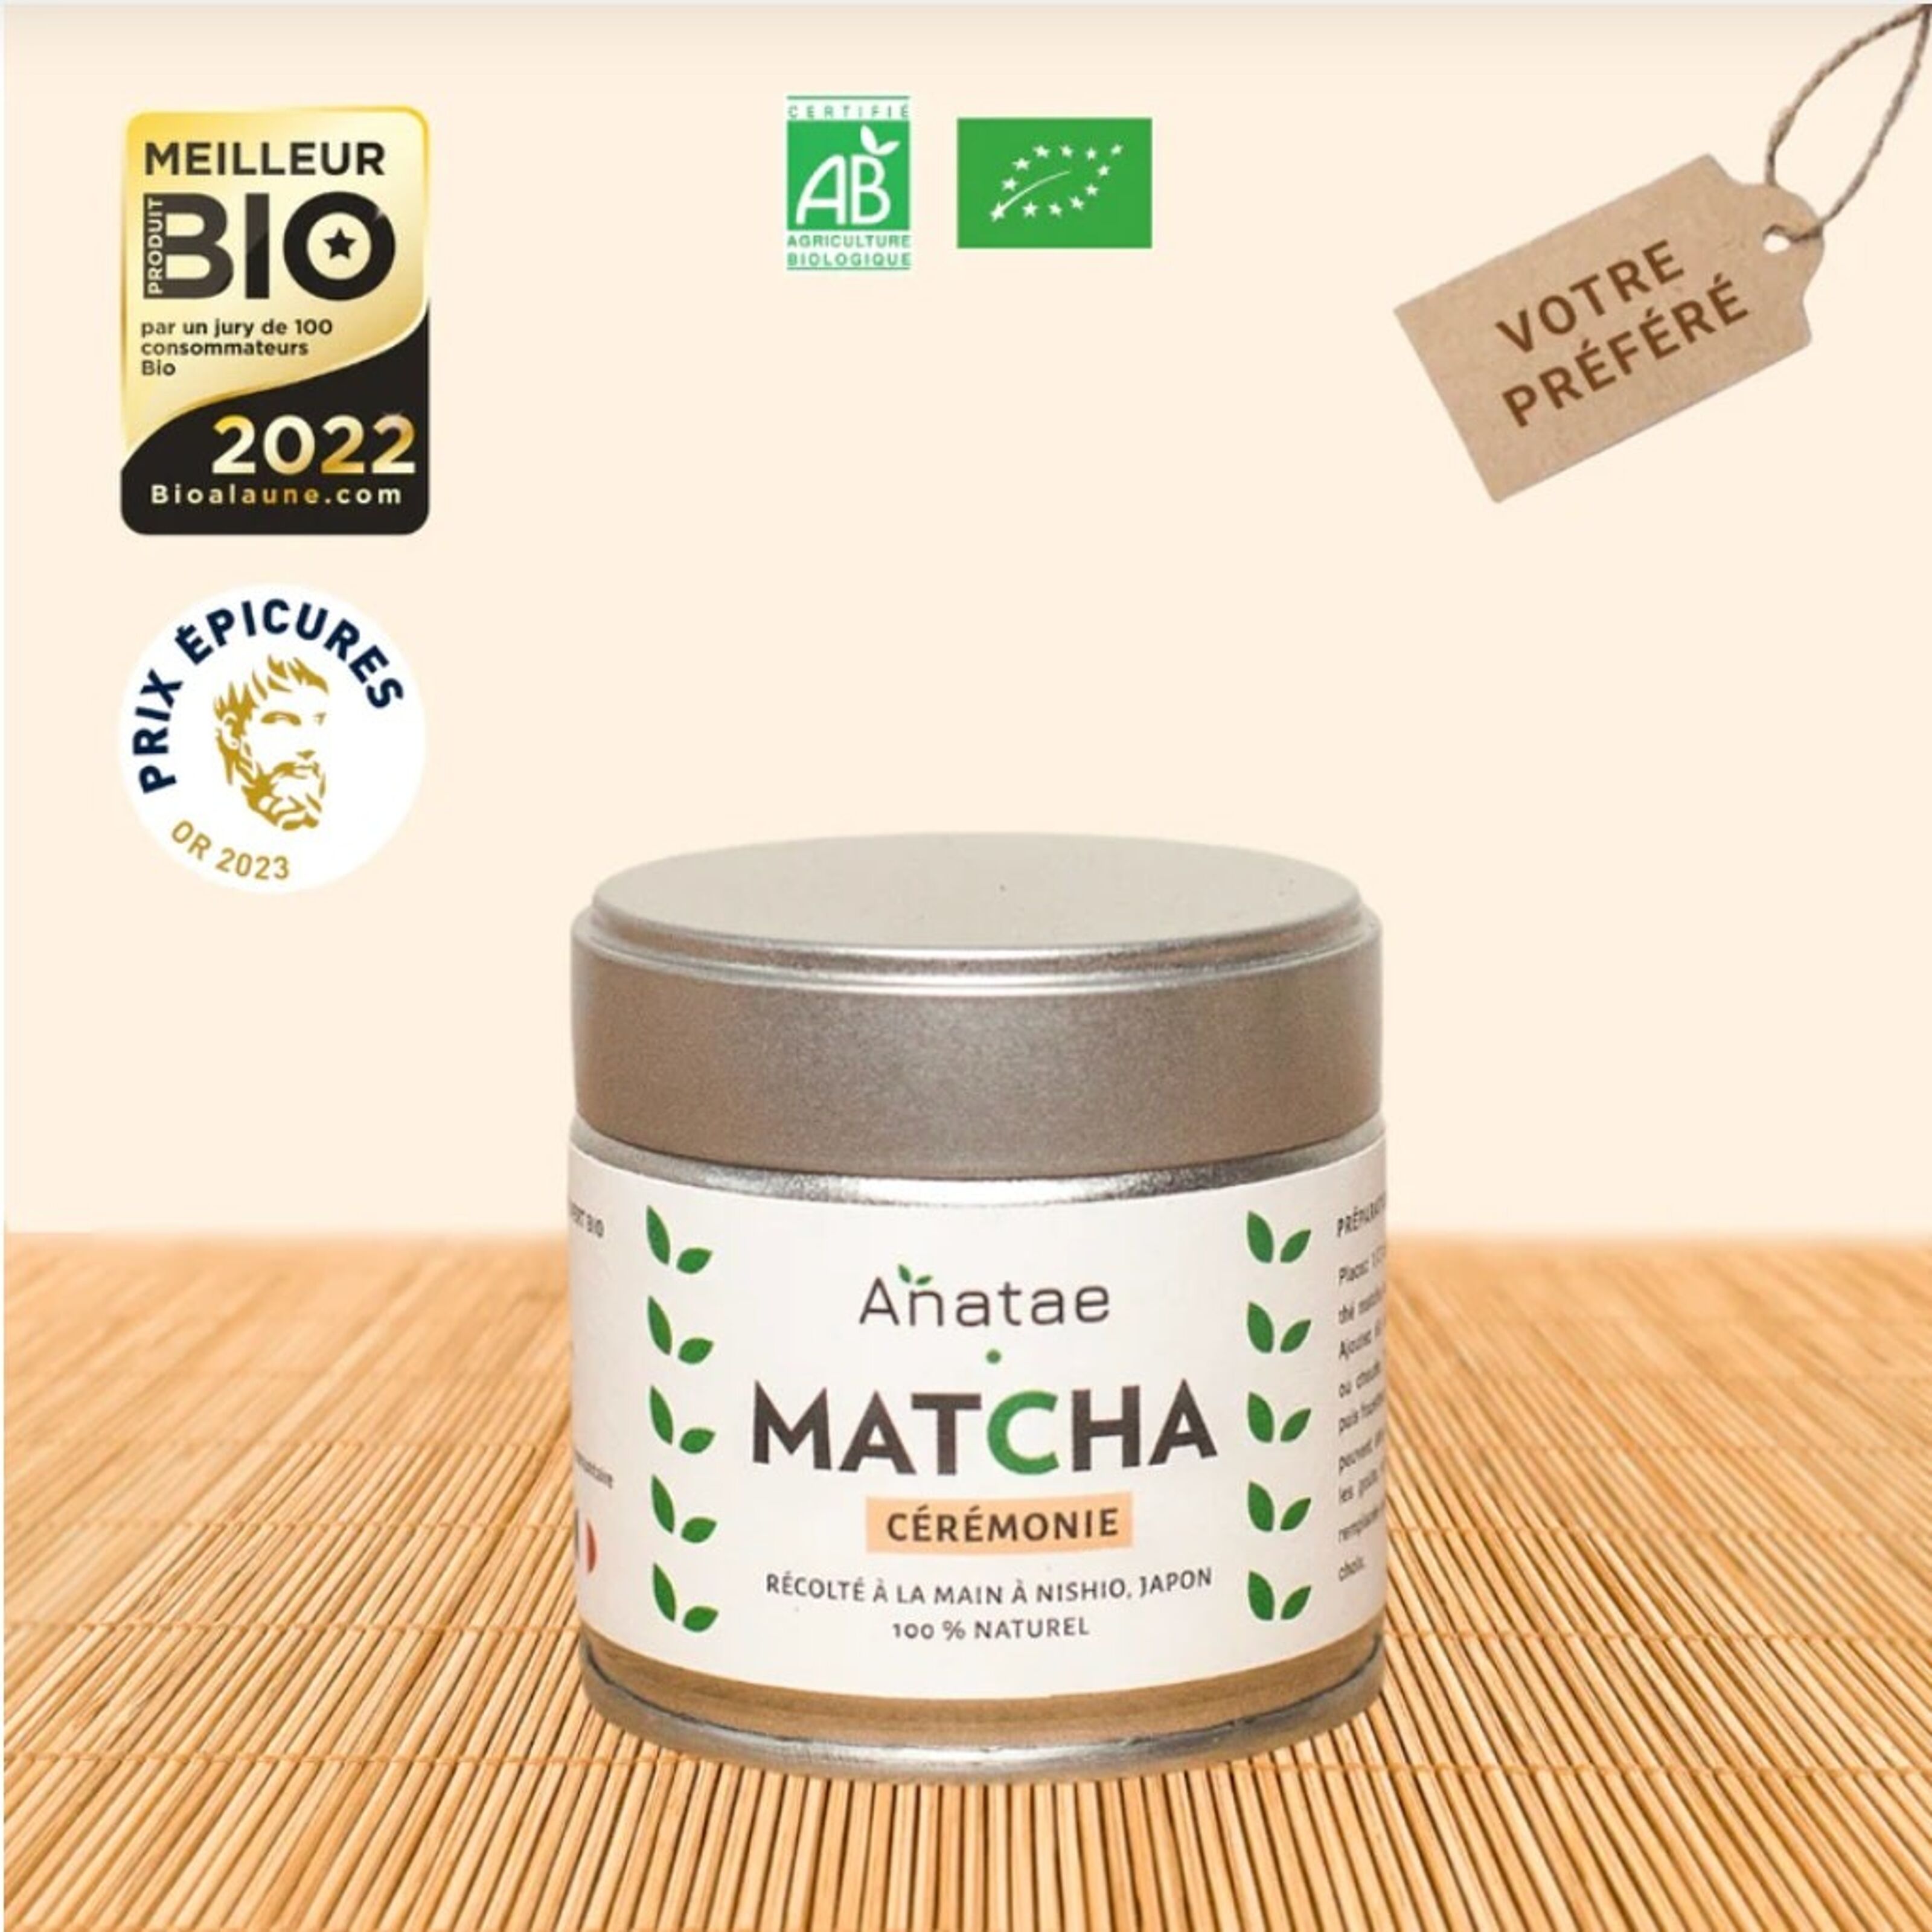 Achat Matcha Ceremony tea 30 g en gros